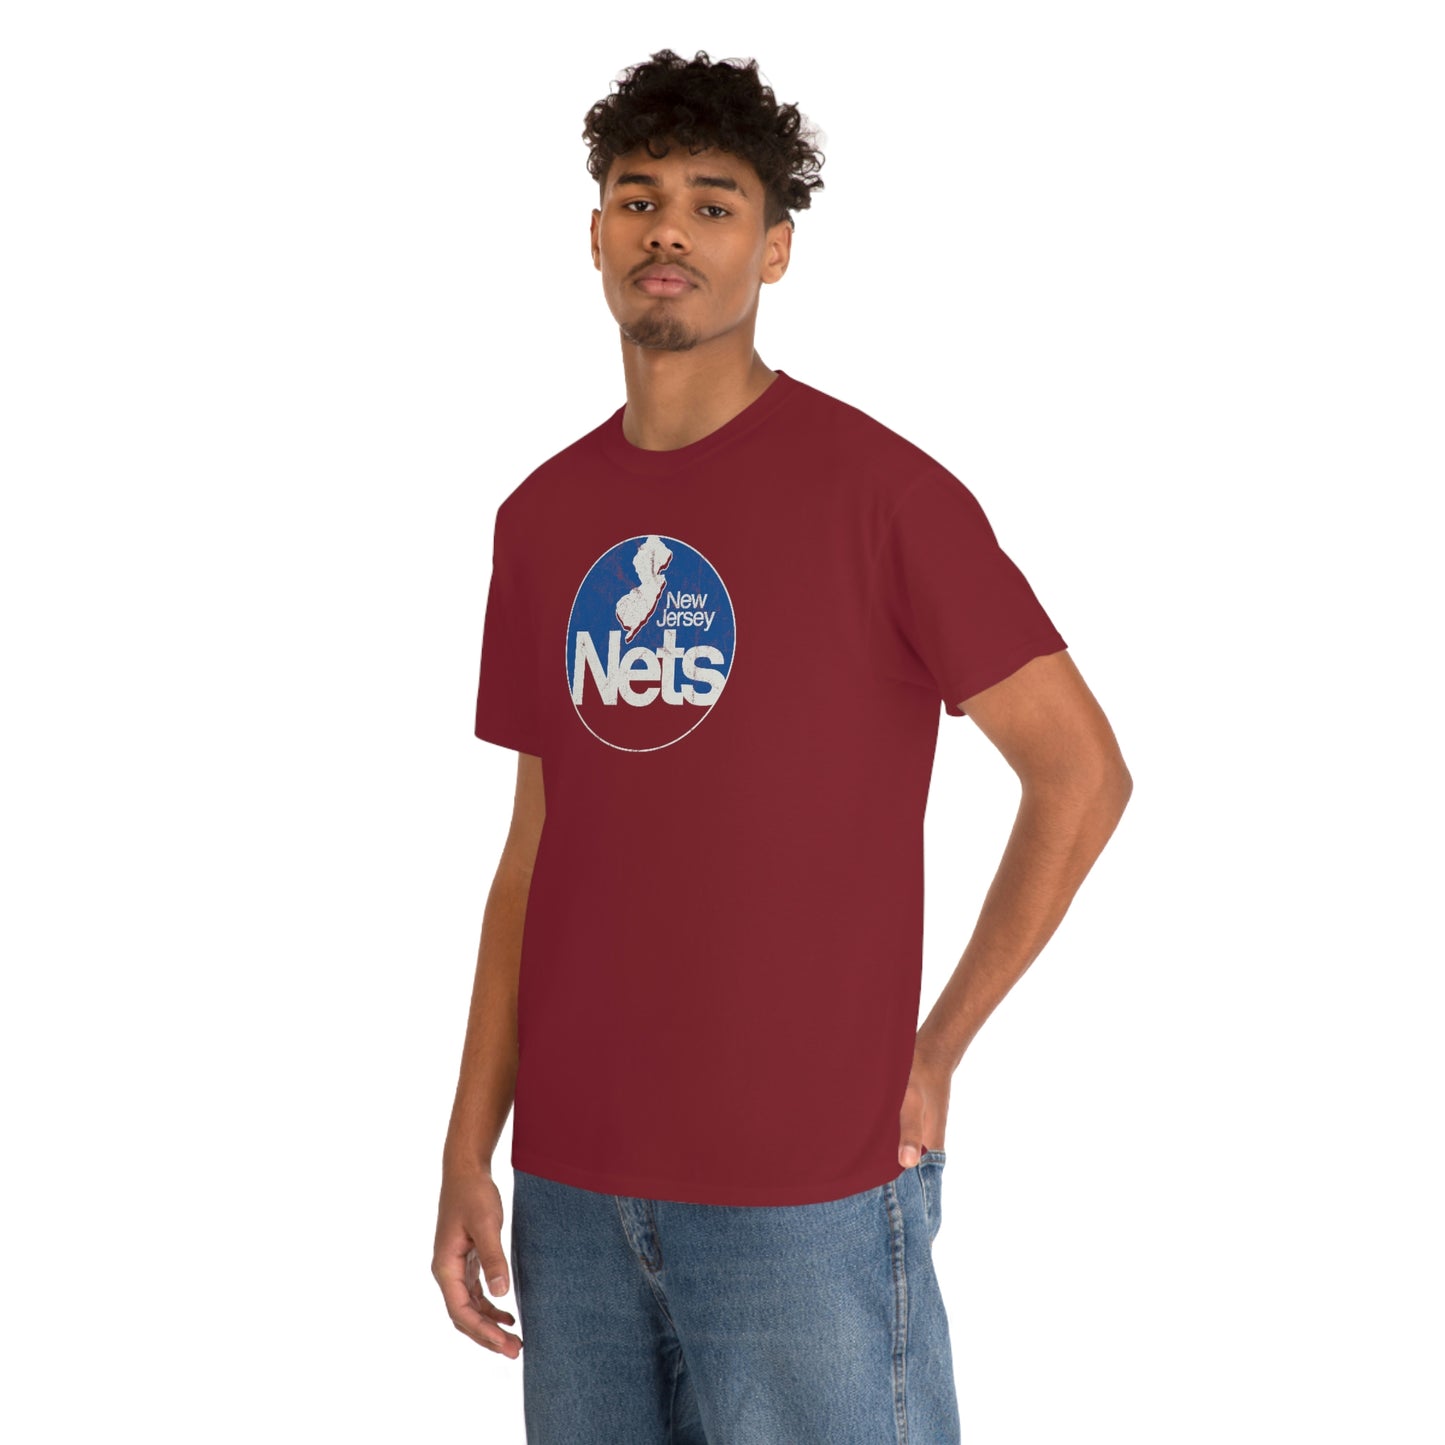 New Jersey Nets Distressed T-Shirt